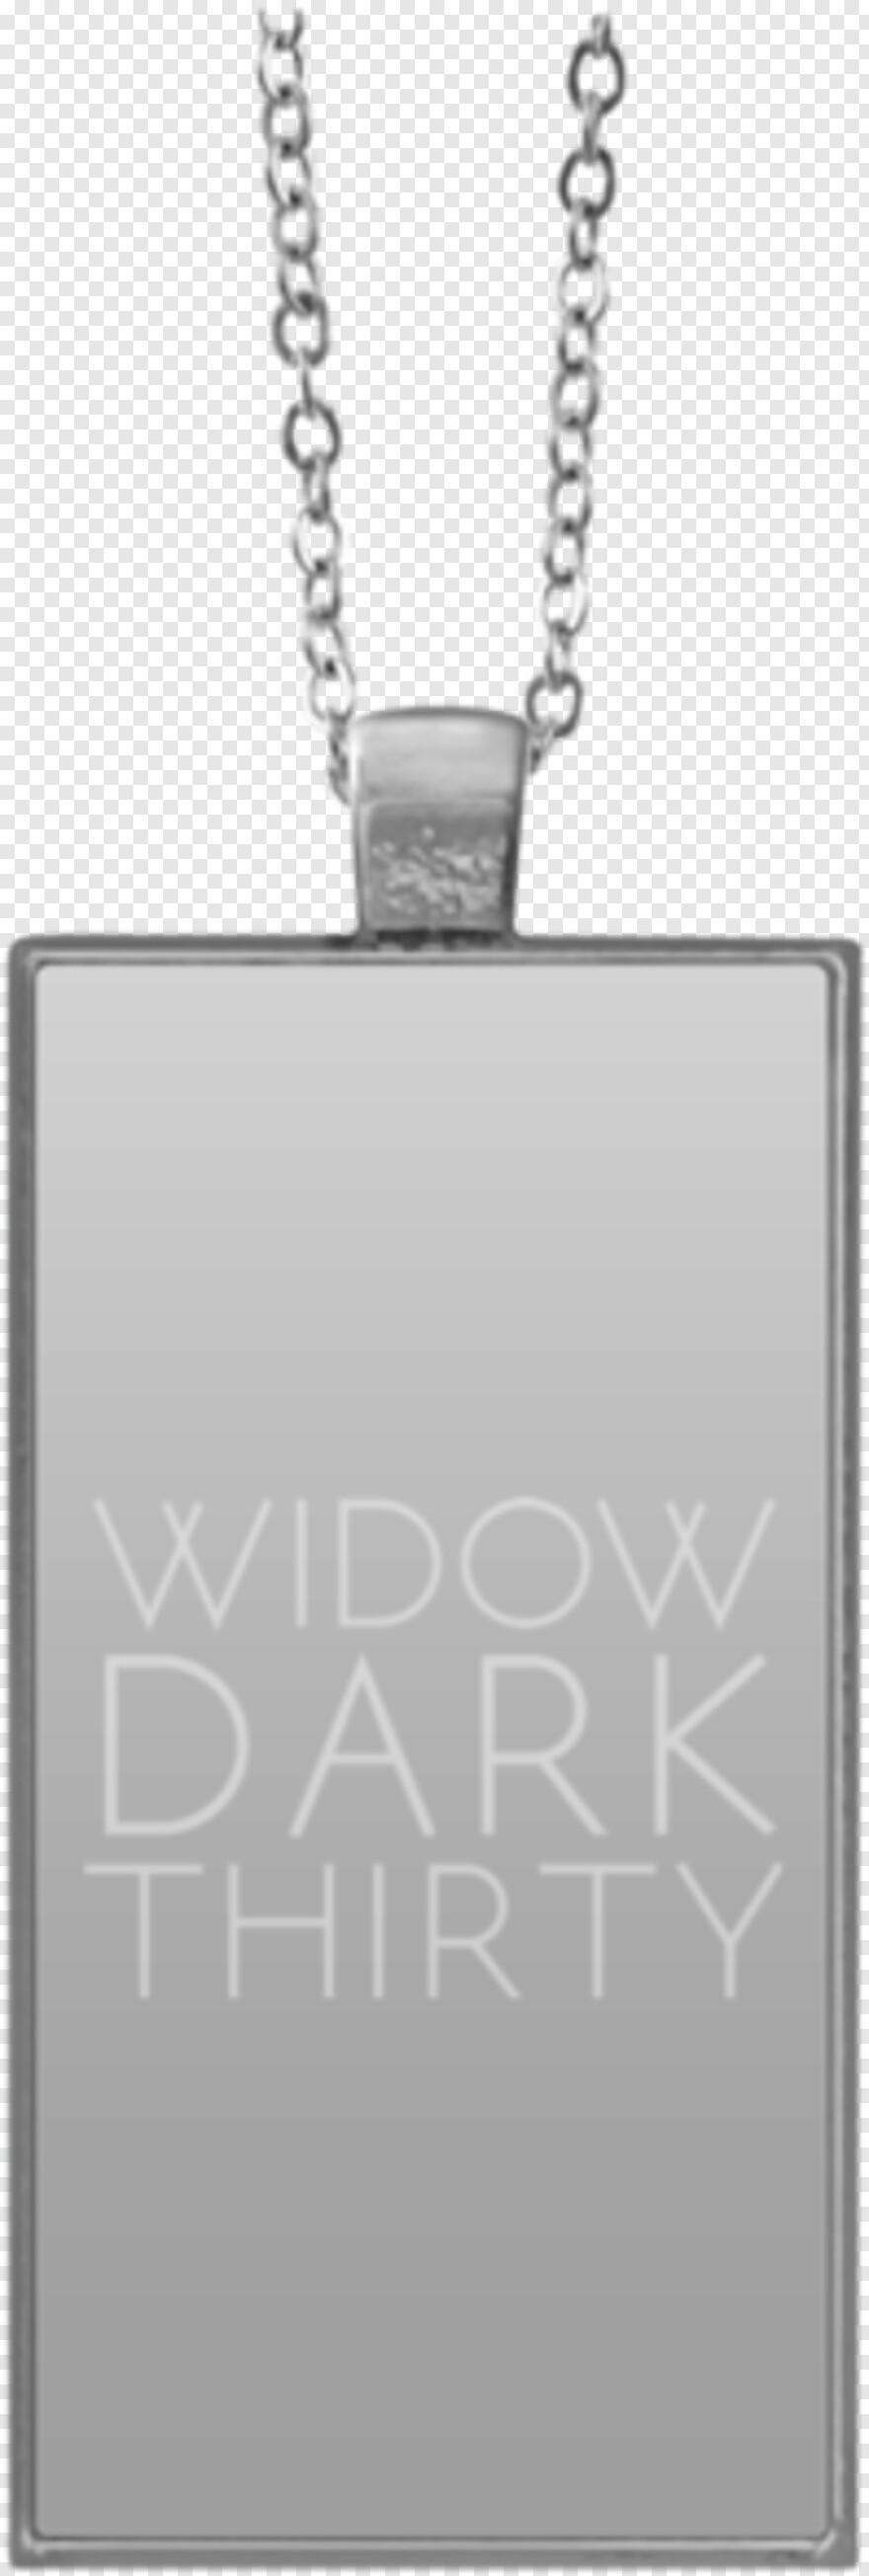 black-widow # 434736